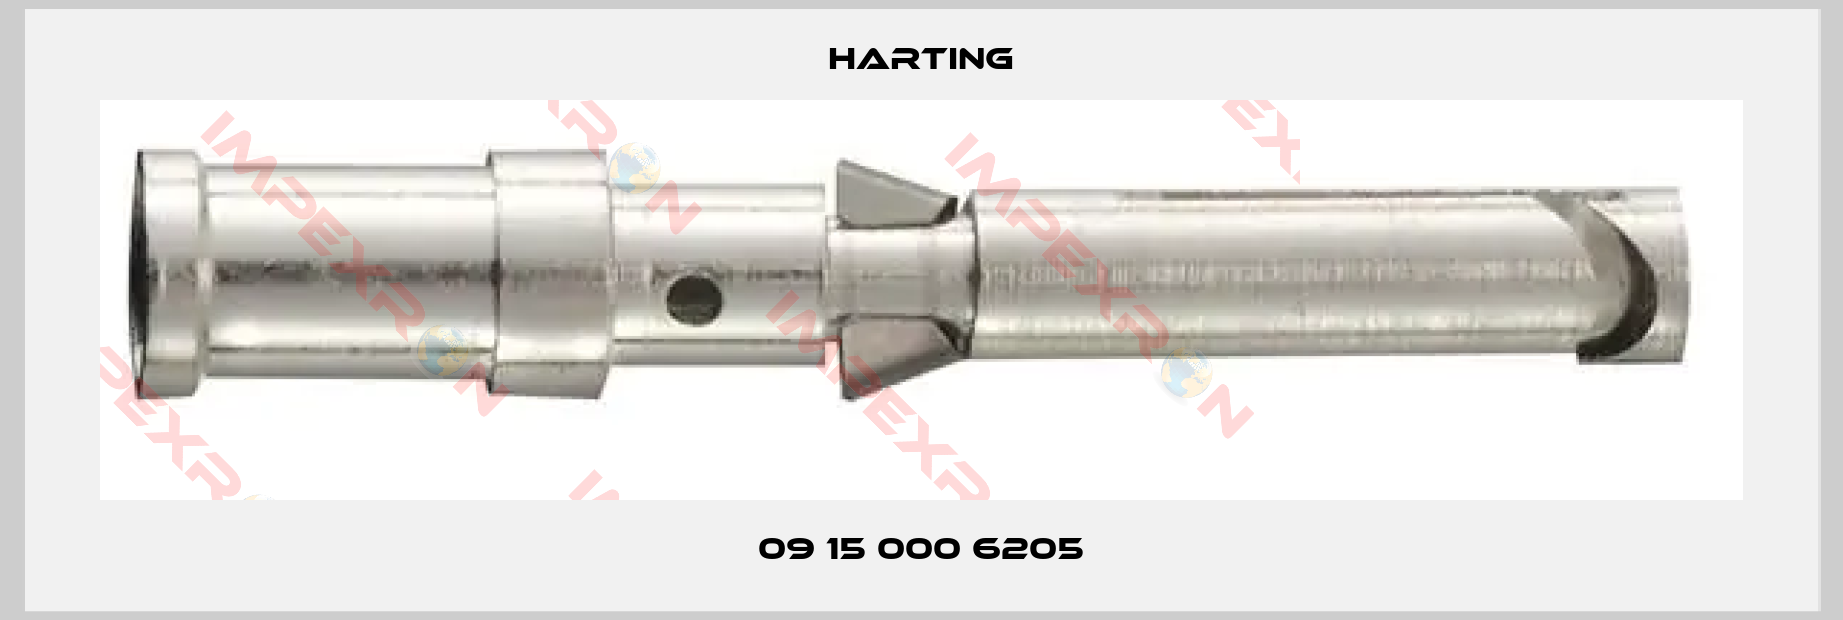 Harting-09 15 000 6205